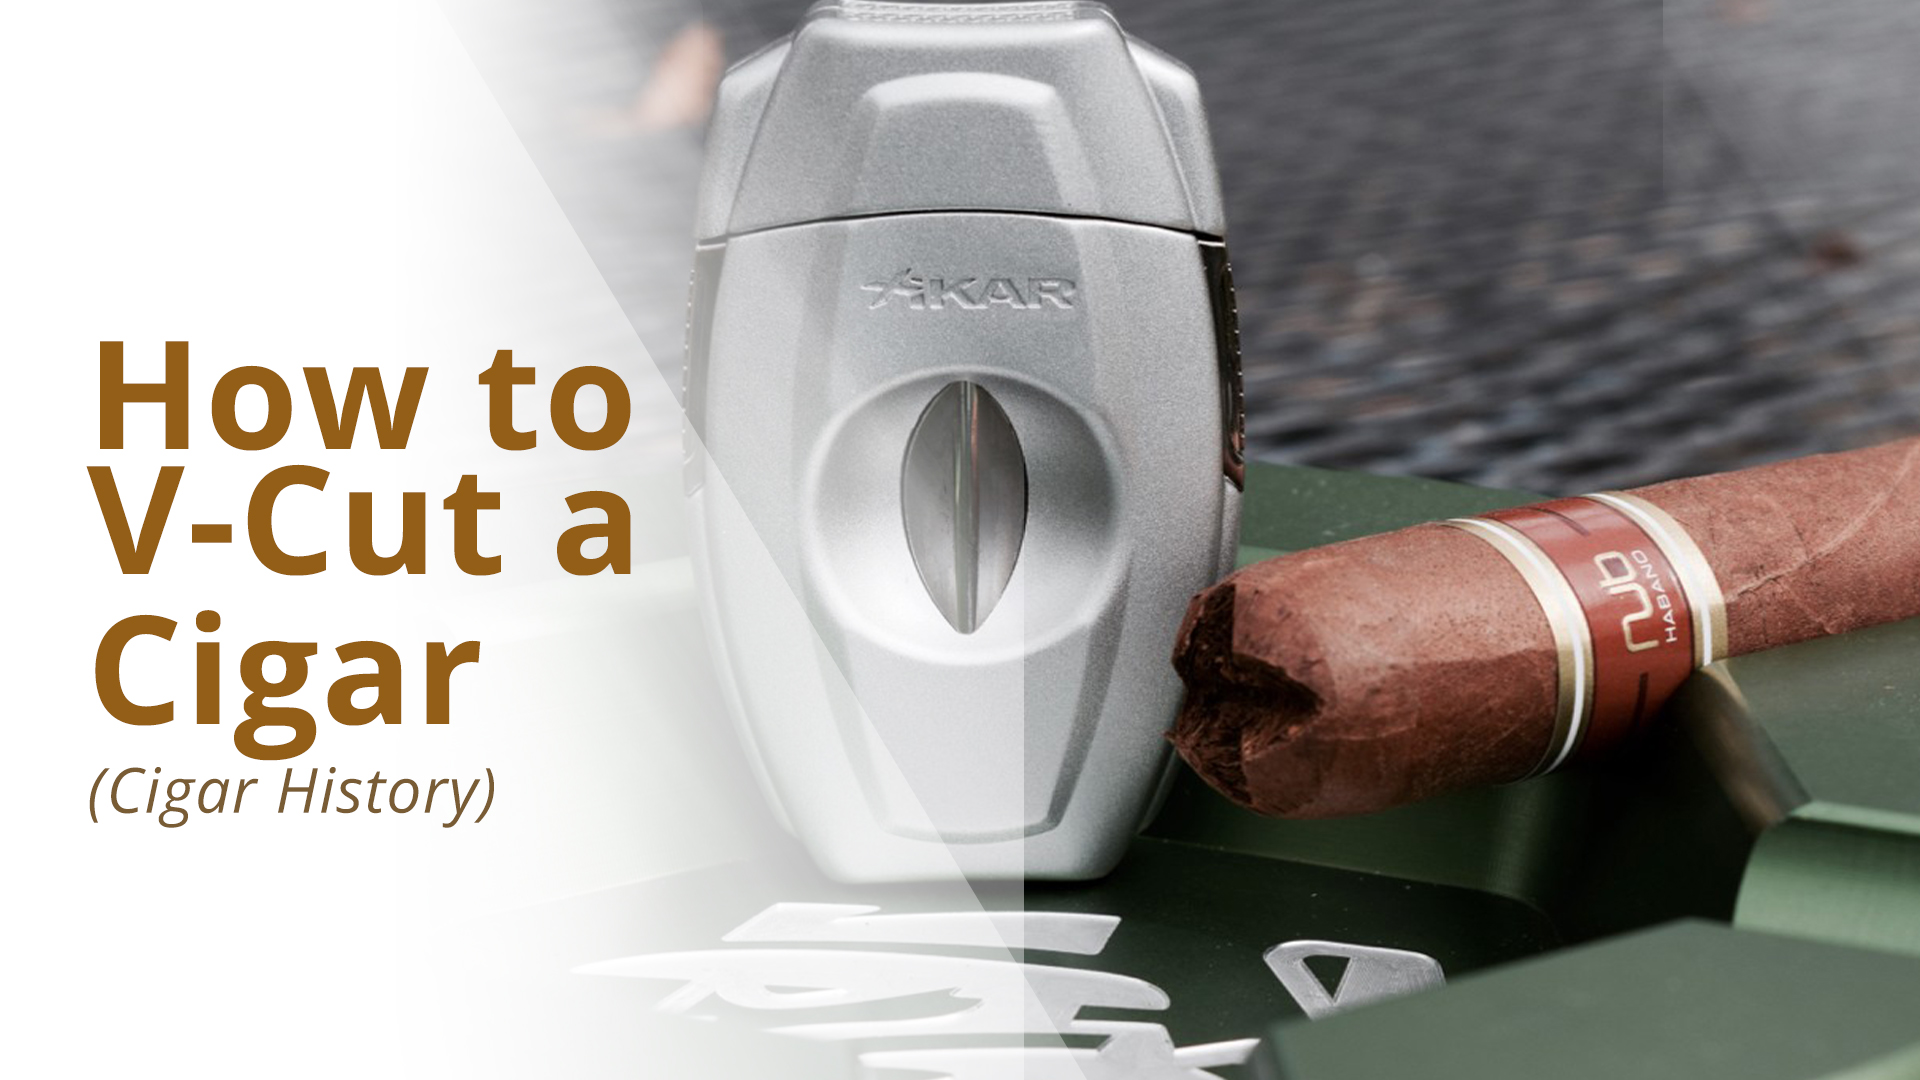 How to V-cut a cigar